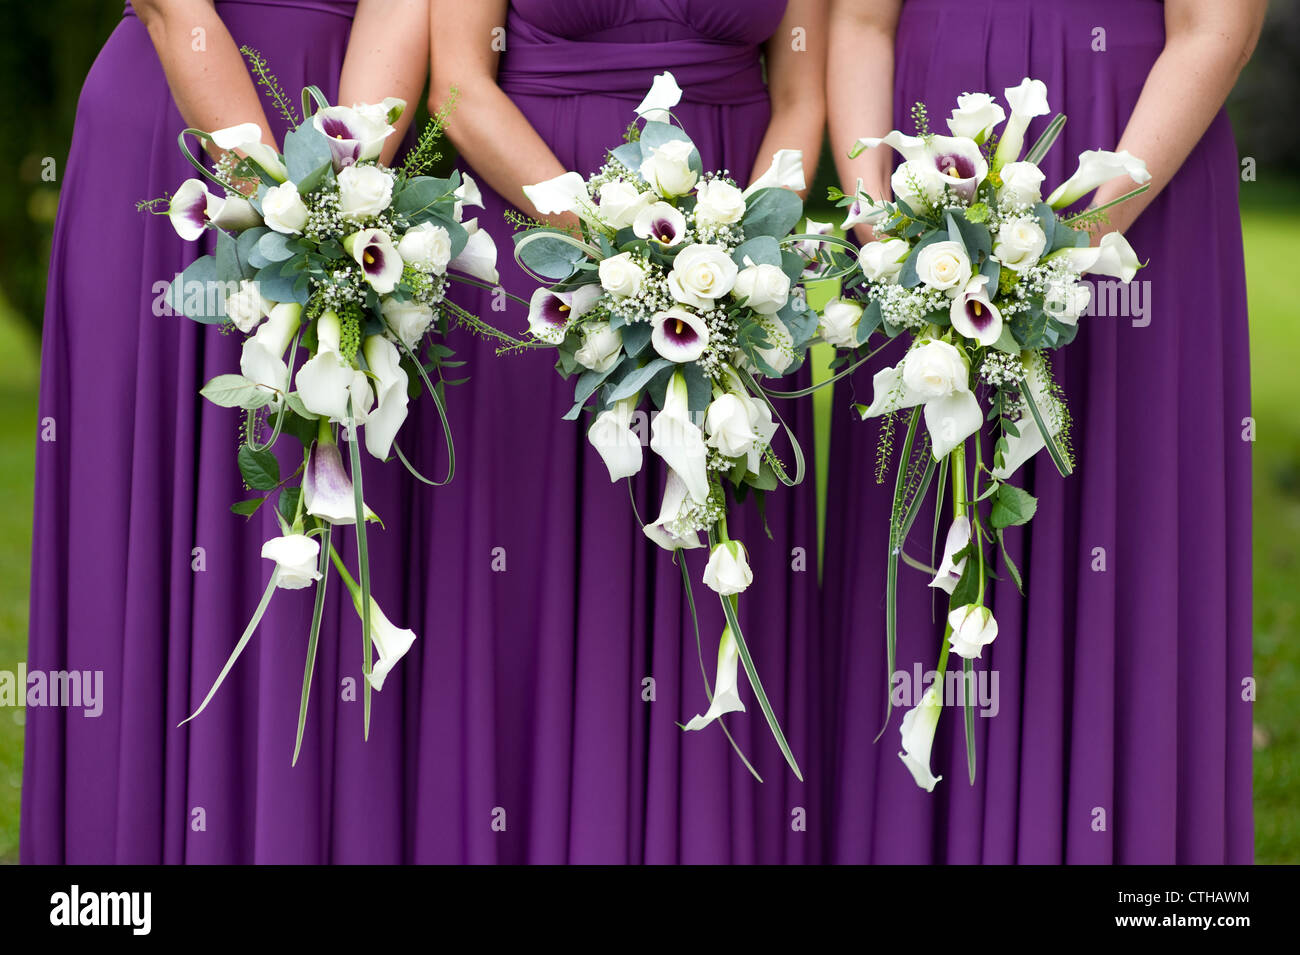 three bridesmaids in purple dresses holding wedding bouquets Stock Photo